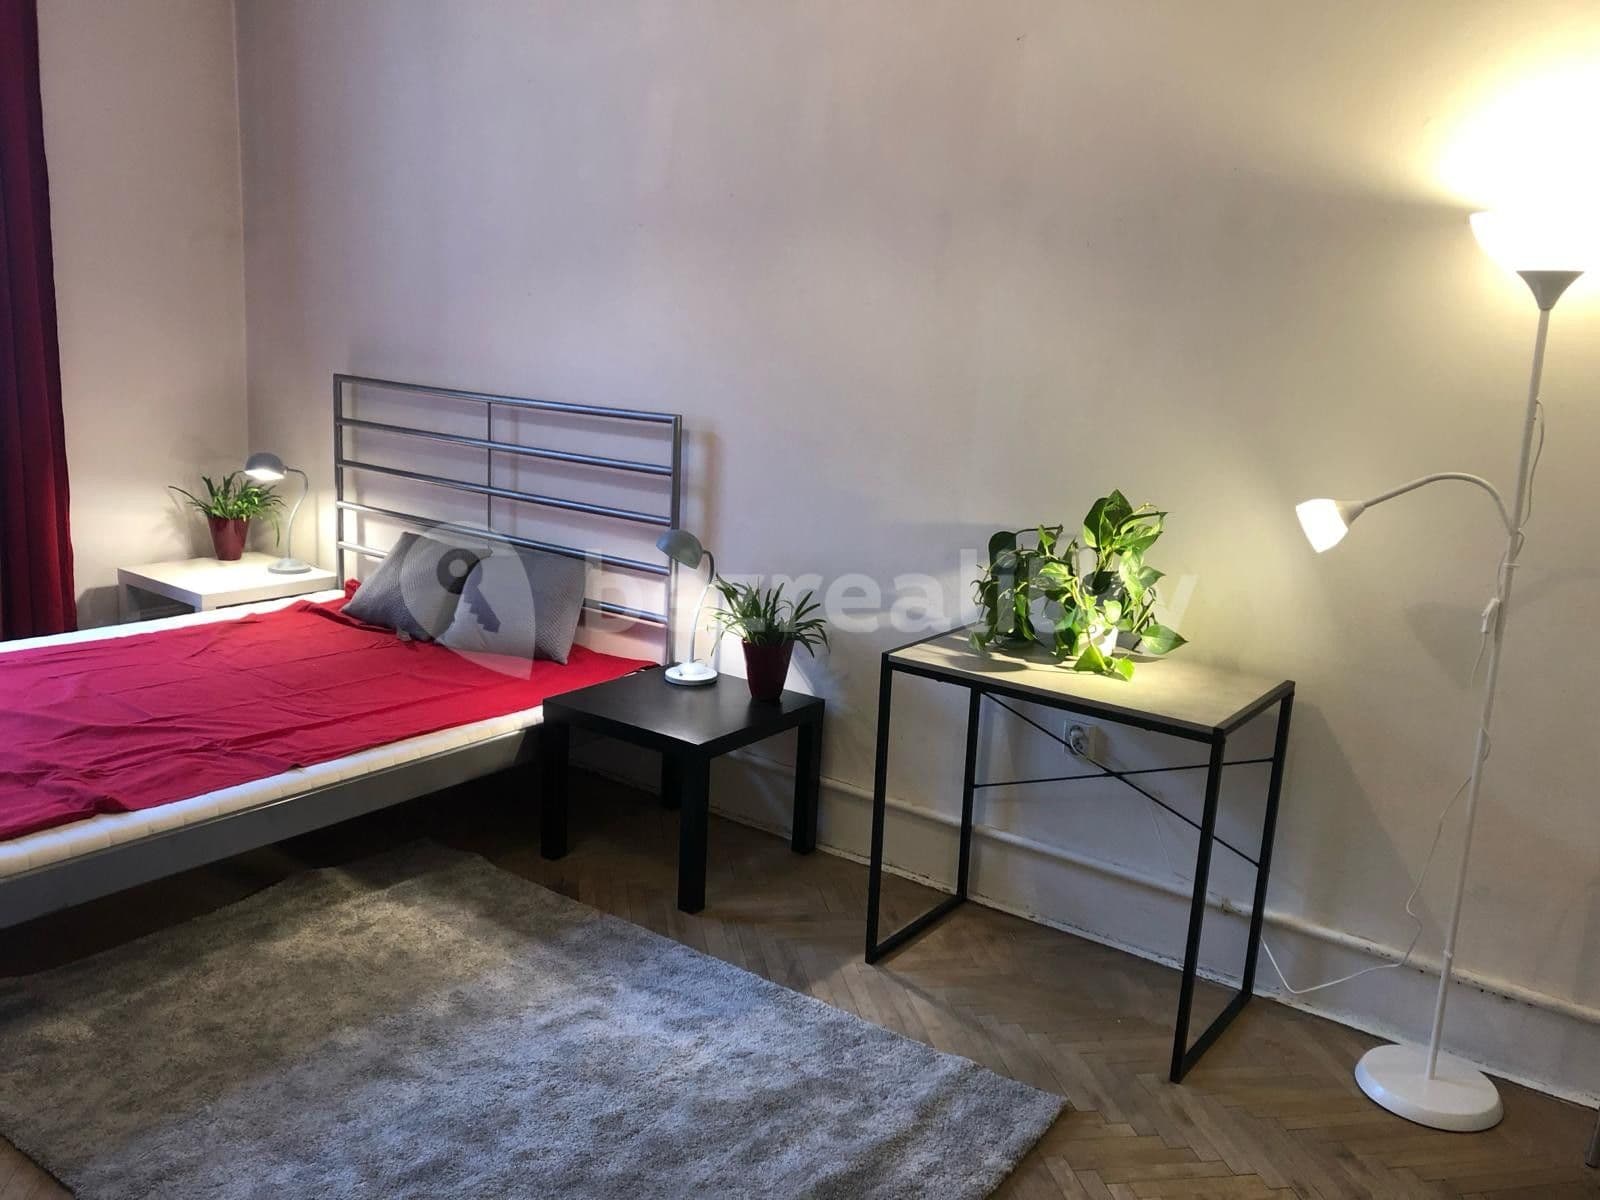 1 bedroom with open-plan kitchen flat to rent, 60 m², Kafkova, Prague, Prague